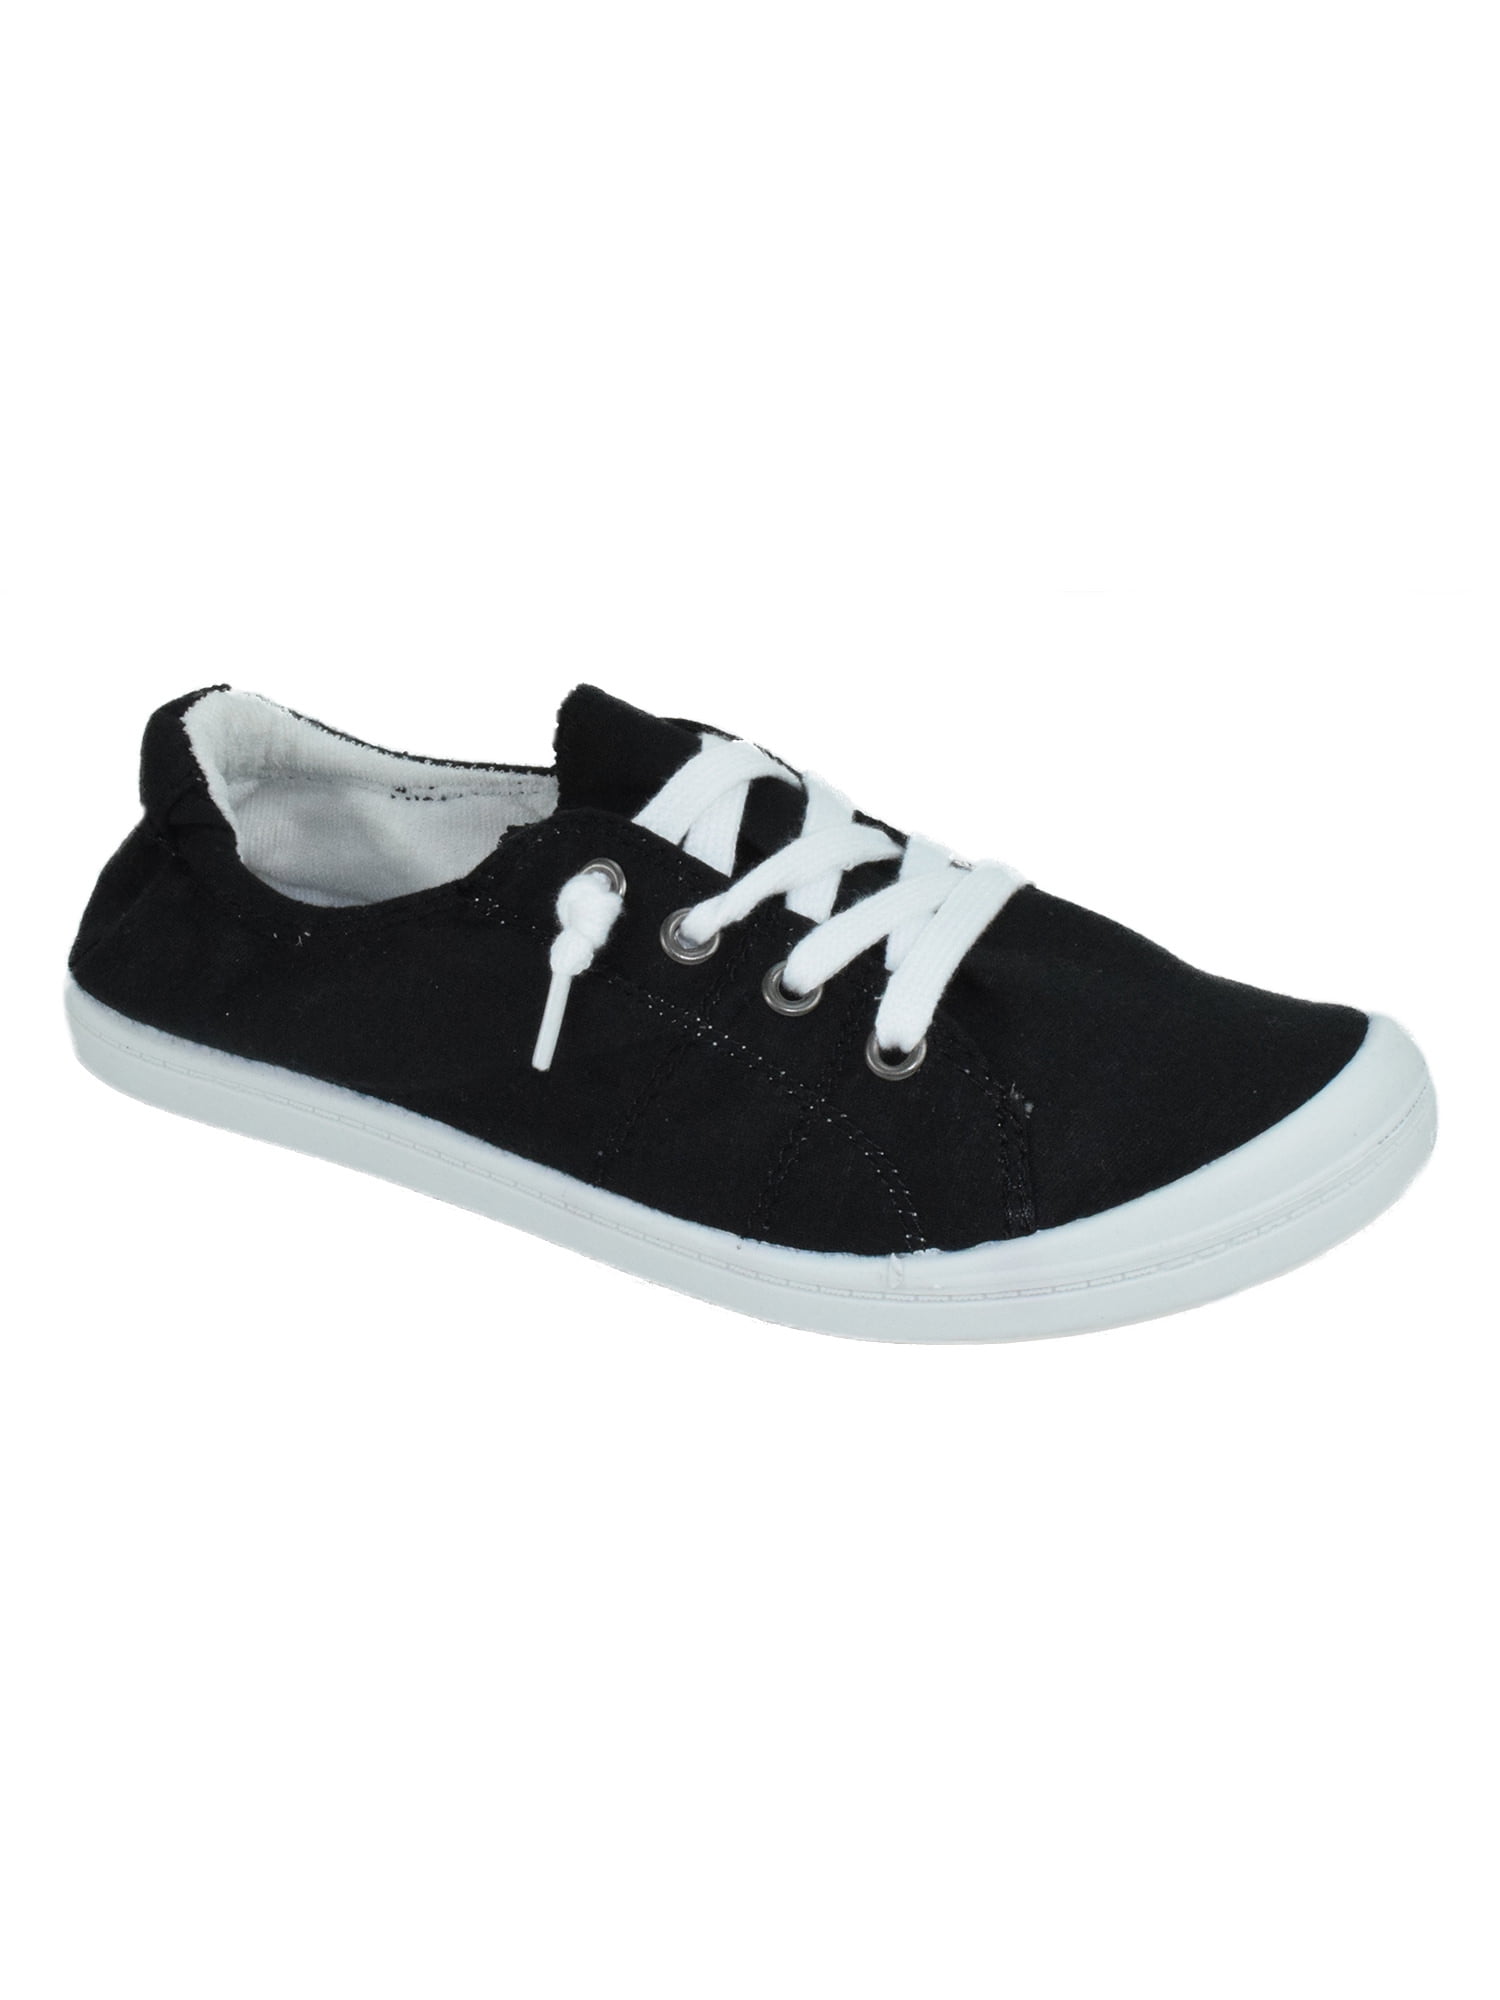 Zig Black White Women Soda Shoes Flat Linen Canvas Fashion Sneakers ...